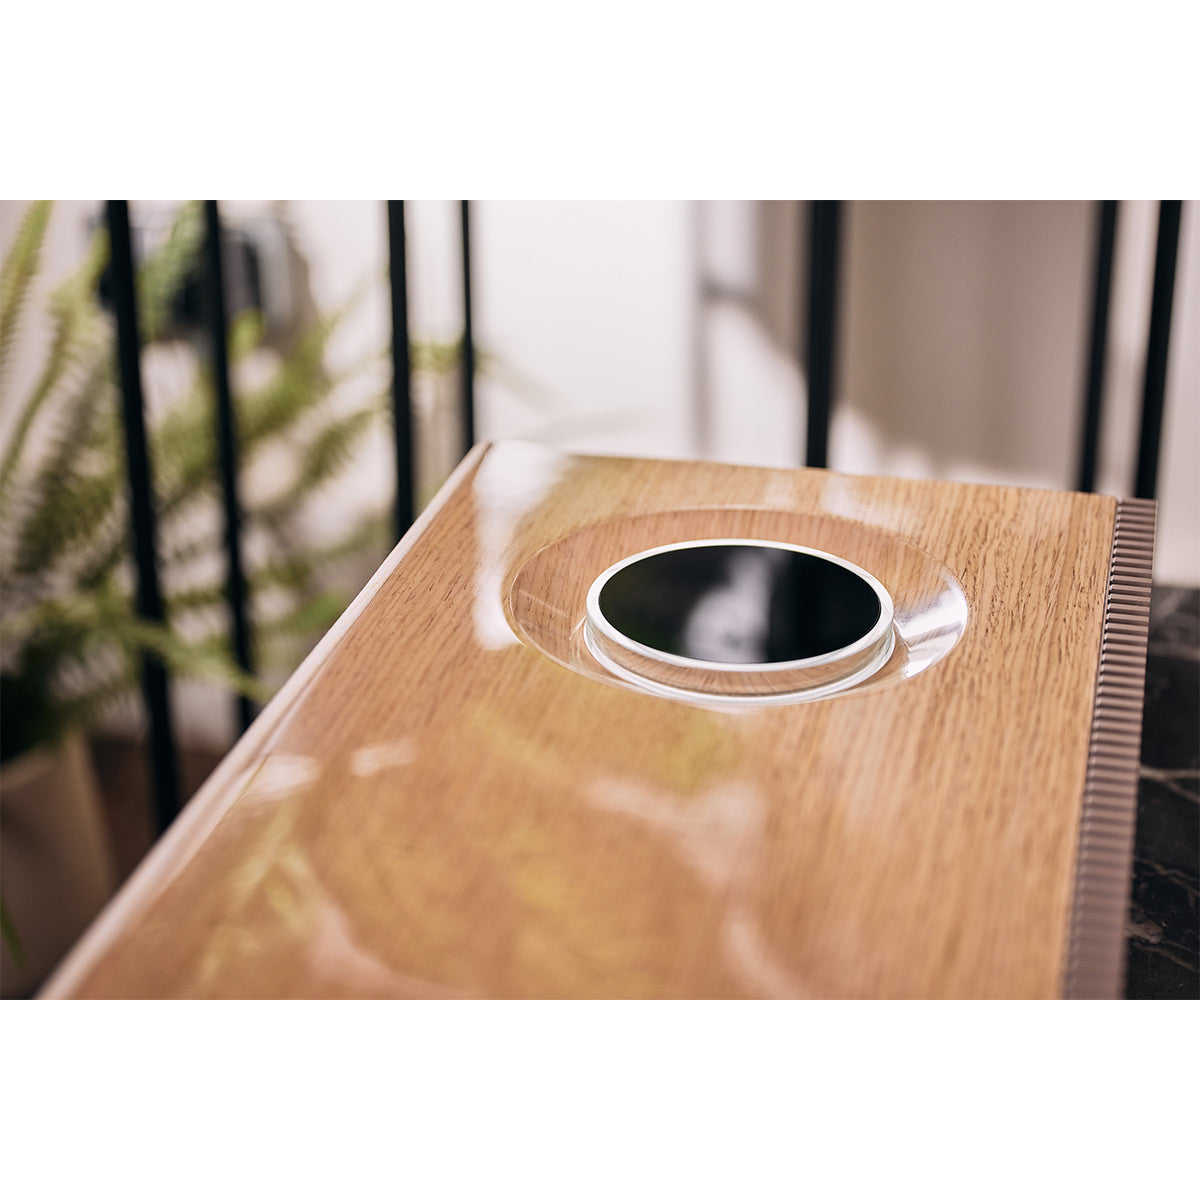 Naim Mu-so All-in-One Wireless Music System Gen 2 (Light Wood)